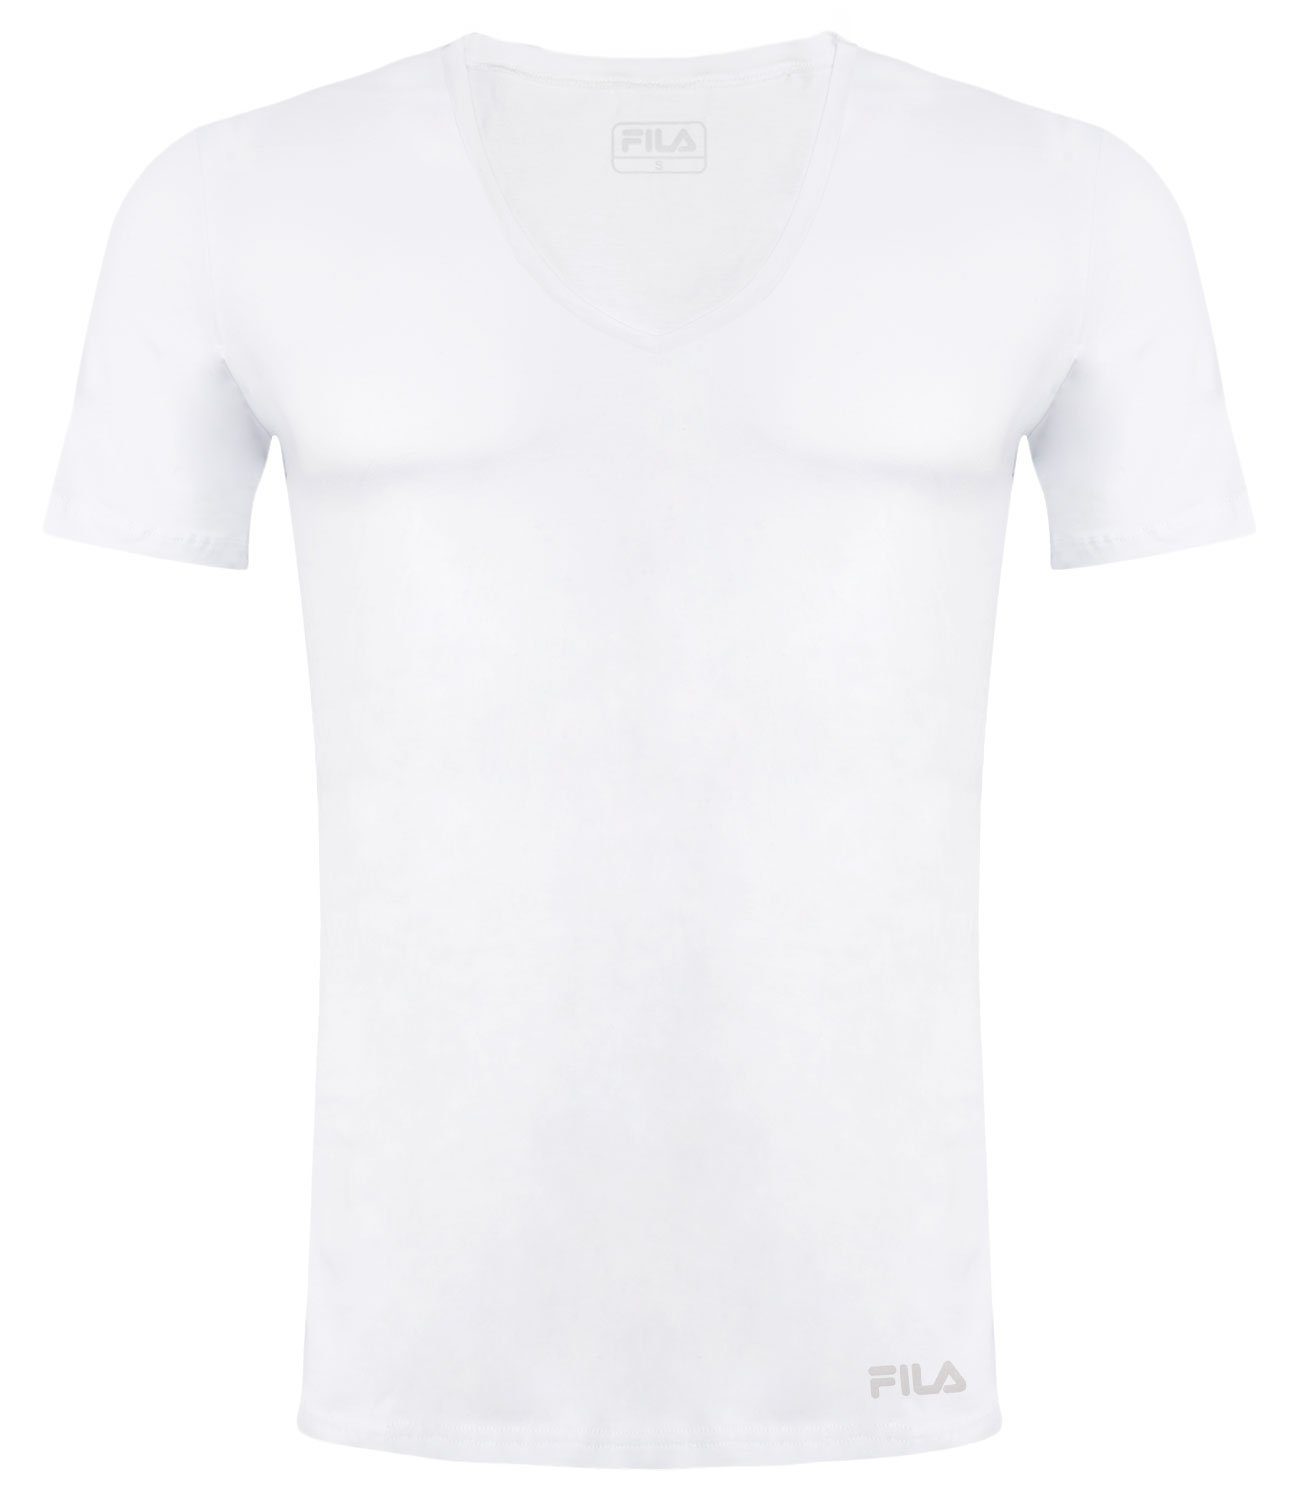 Fila T-Shirt 300 V-Neck white weichem Baumwolljersey aus